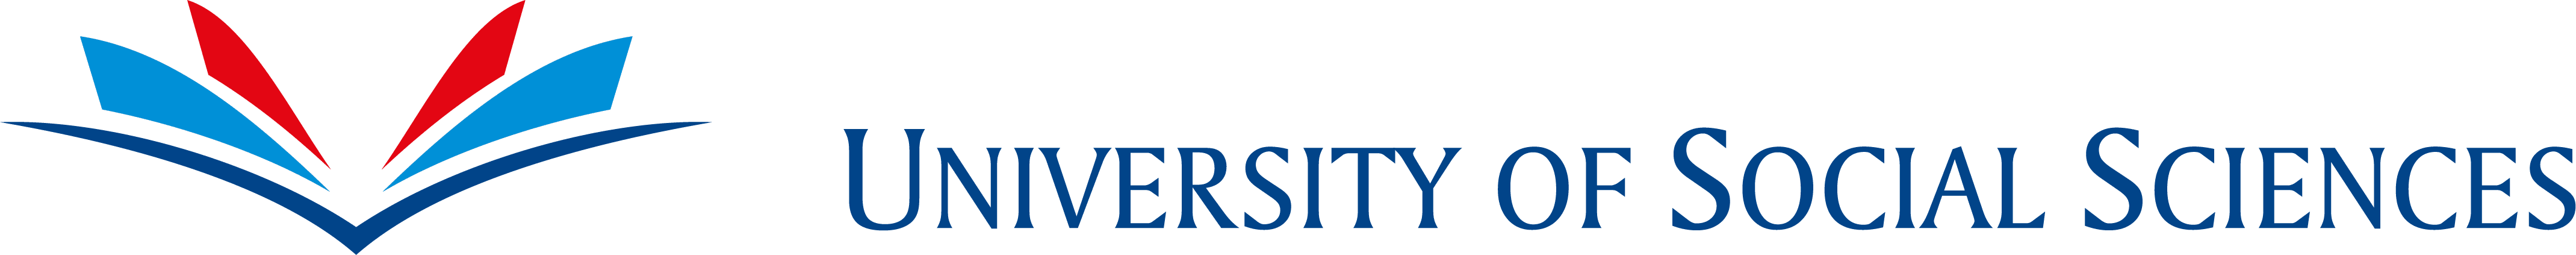 UoSS Alummi Club - University of Social Sciences - University of Social Sciences - University of SAN